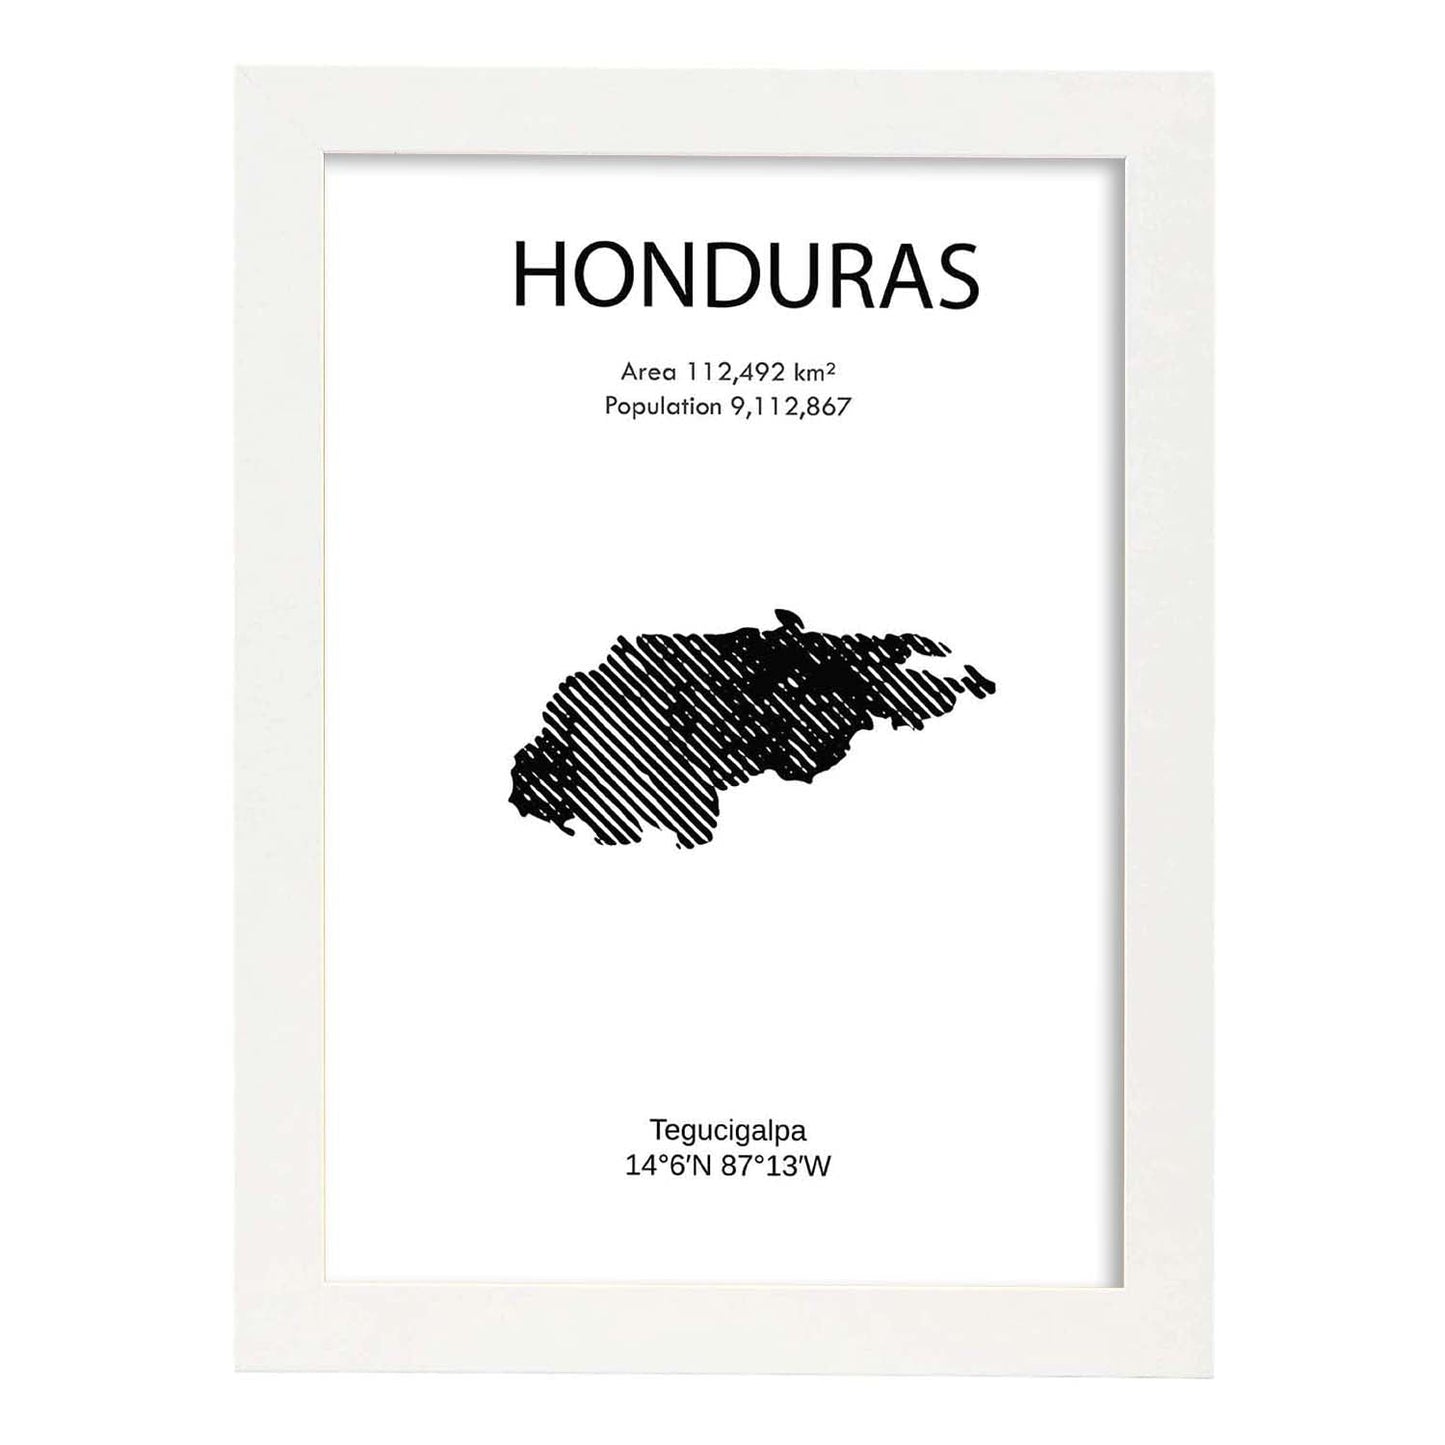 Poster de Honduras. Láminas de paises y continentes del mundo.-Artwork-Nacnic-A4-Marco Blanco-Nacnic Estudio SL